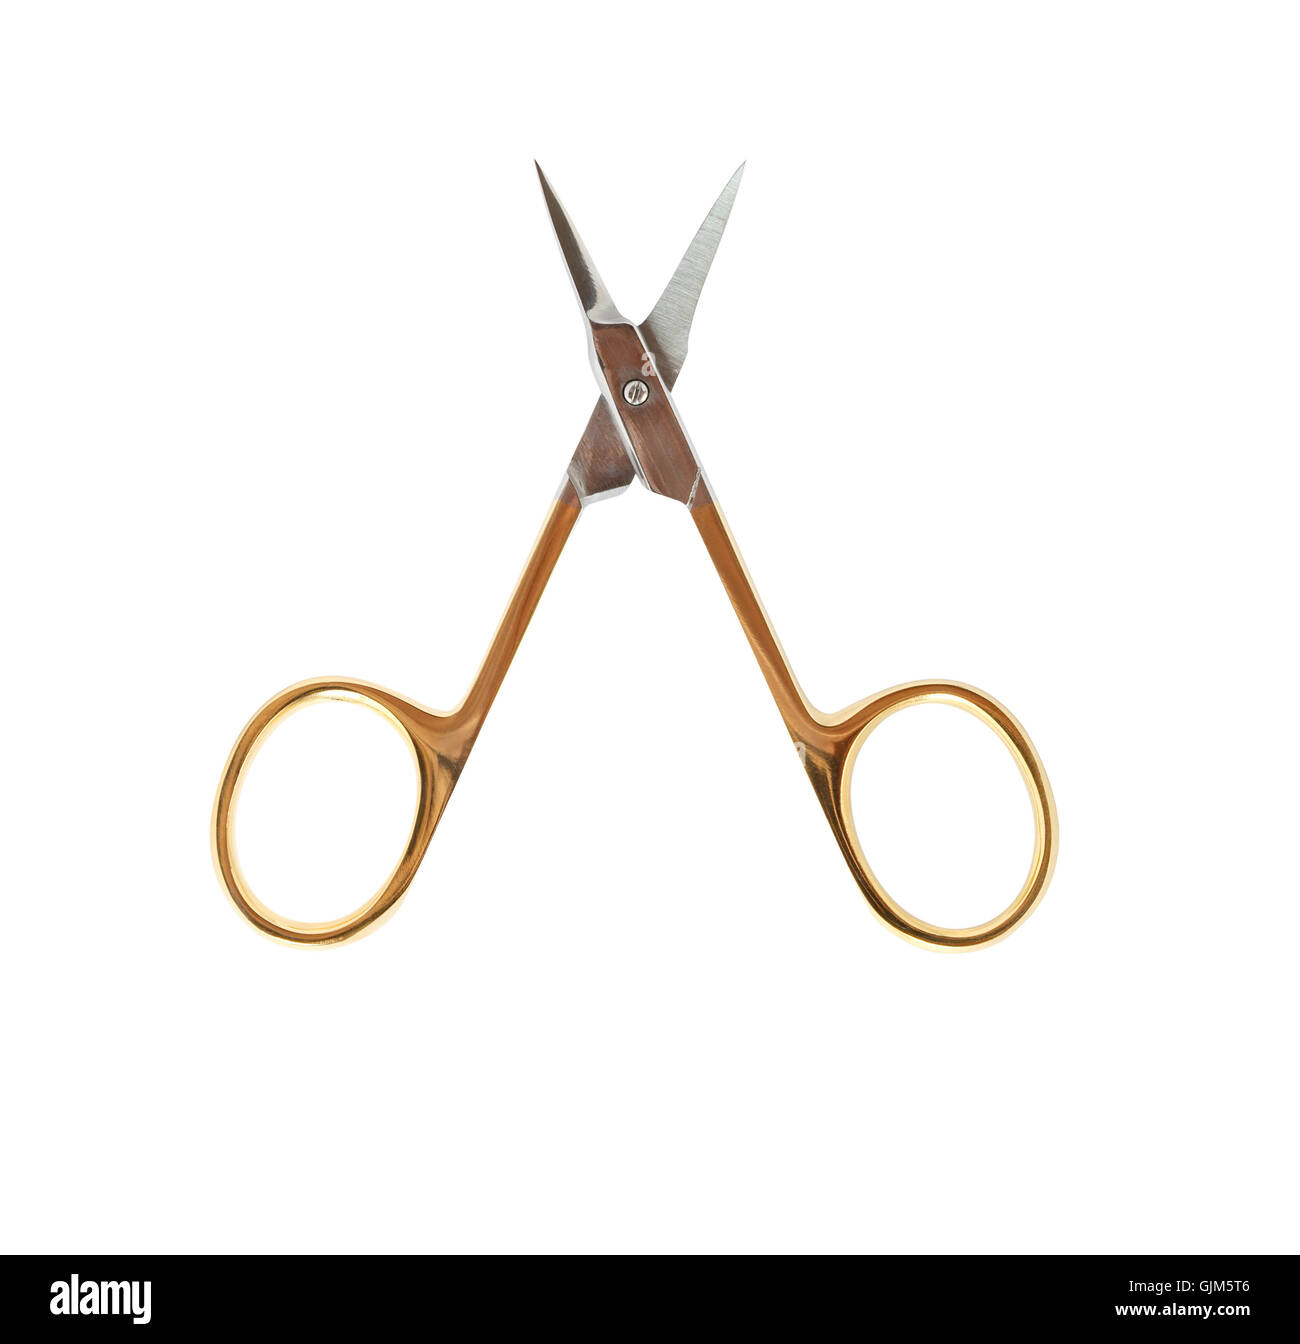 Manicure Scissors On White Stock Photo